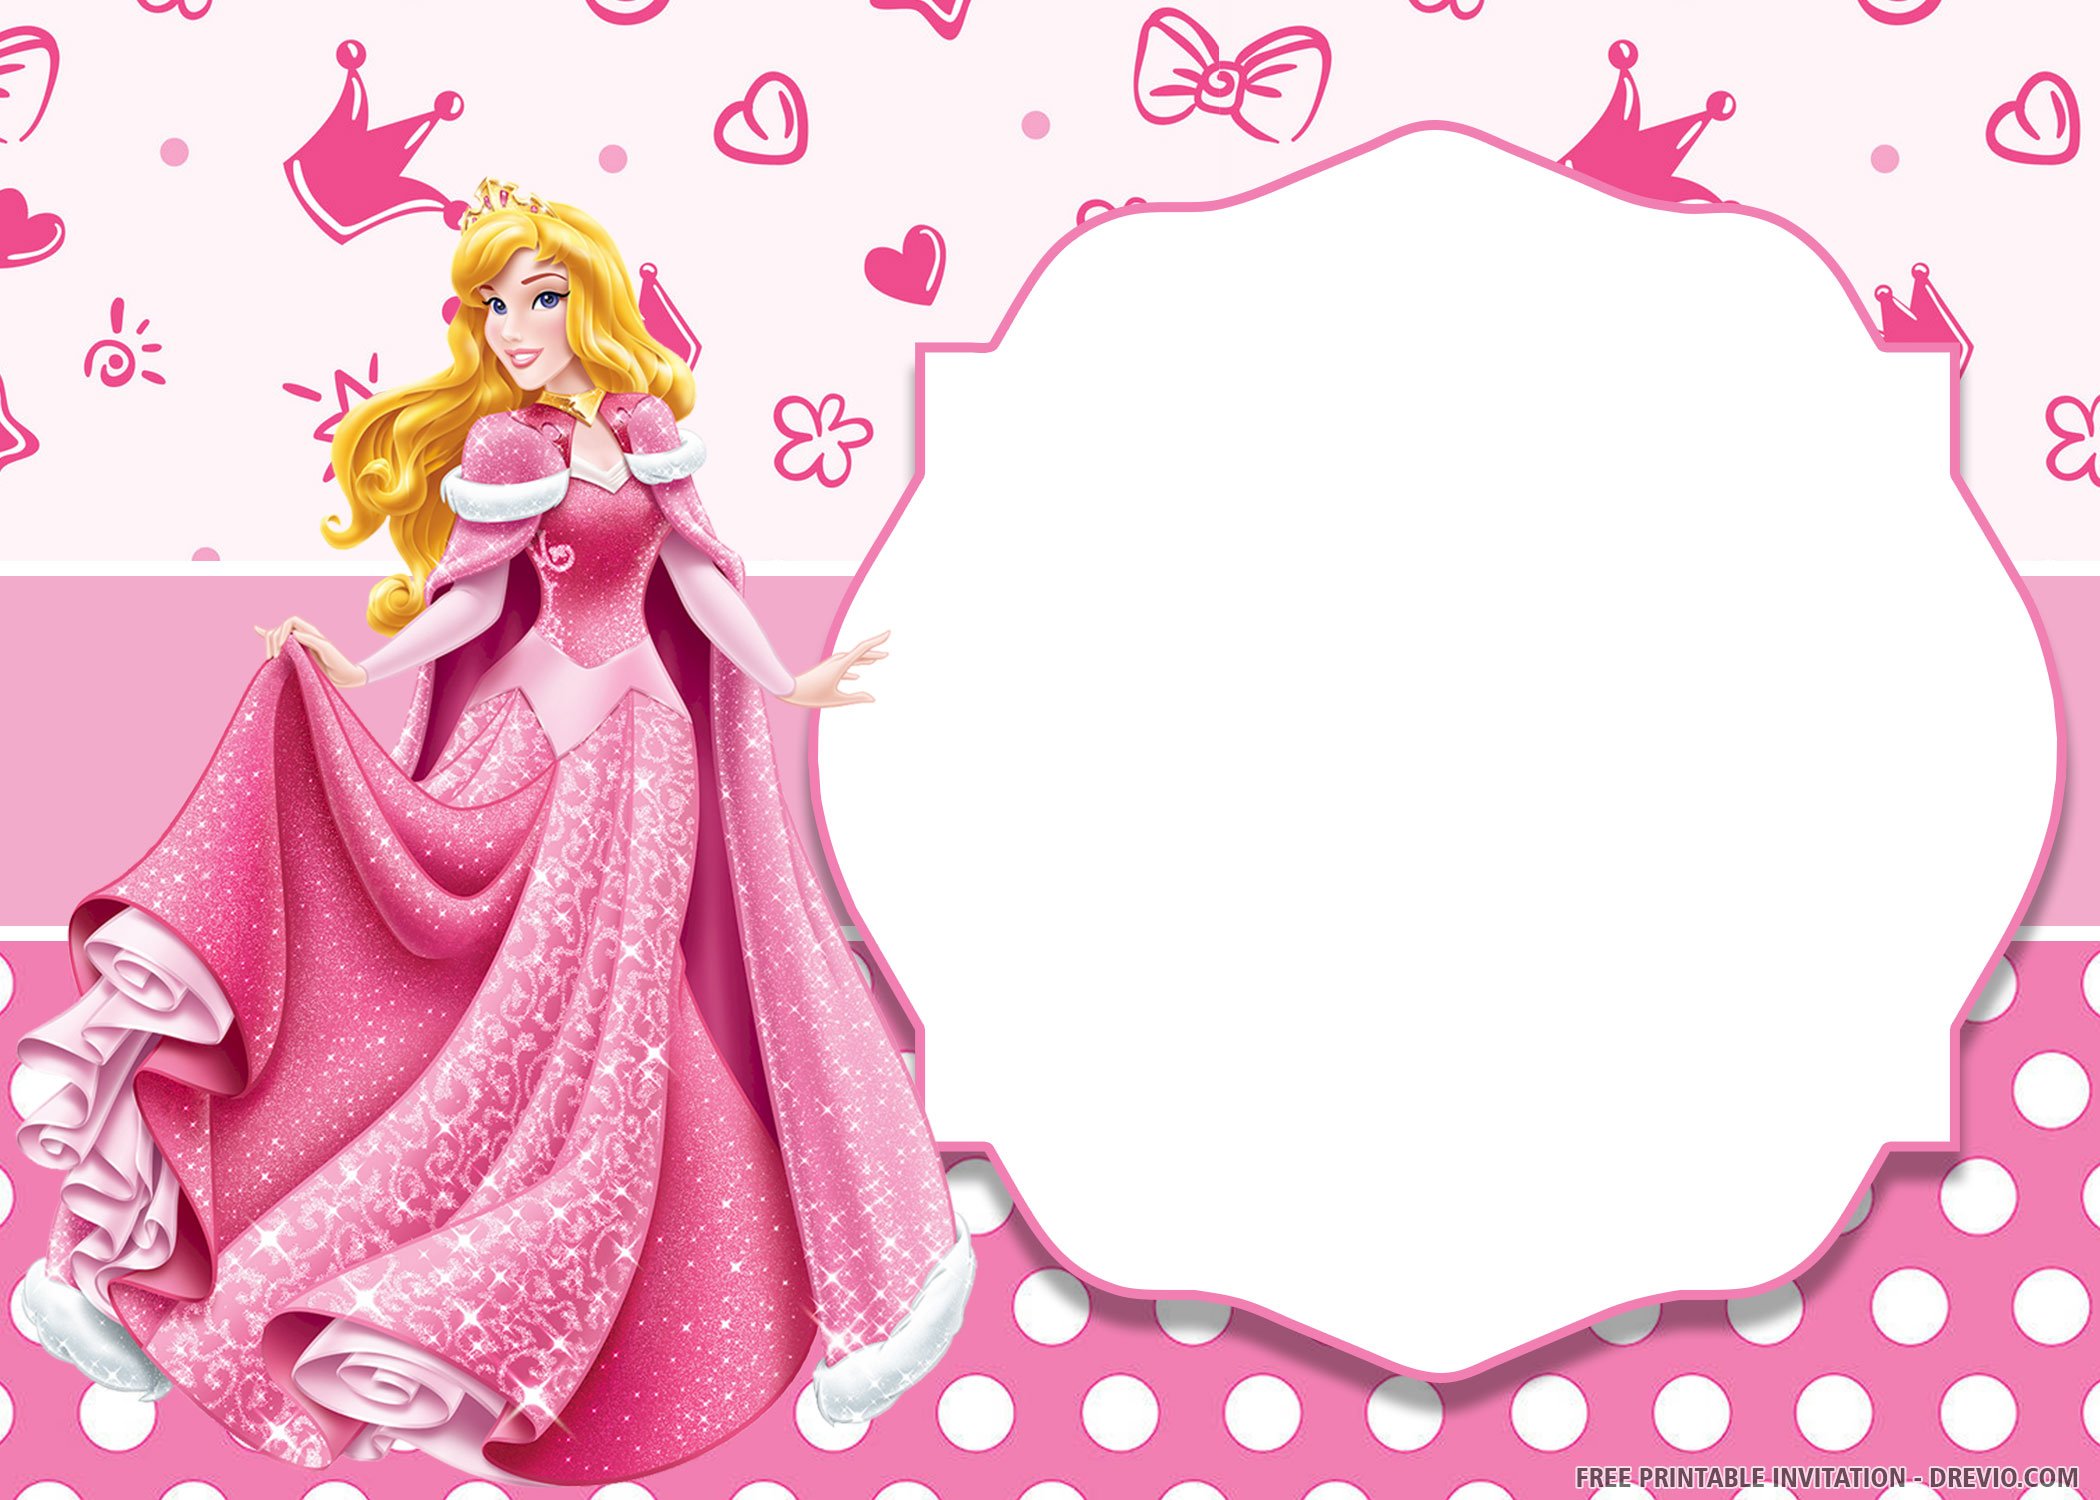 Free Printable Beautiful Princess Invitation TemplatesFREE PRINTABLE ...